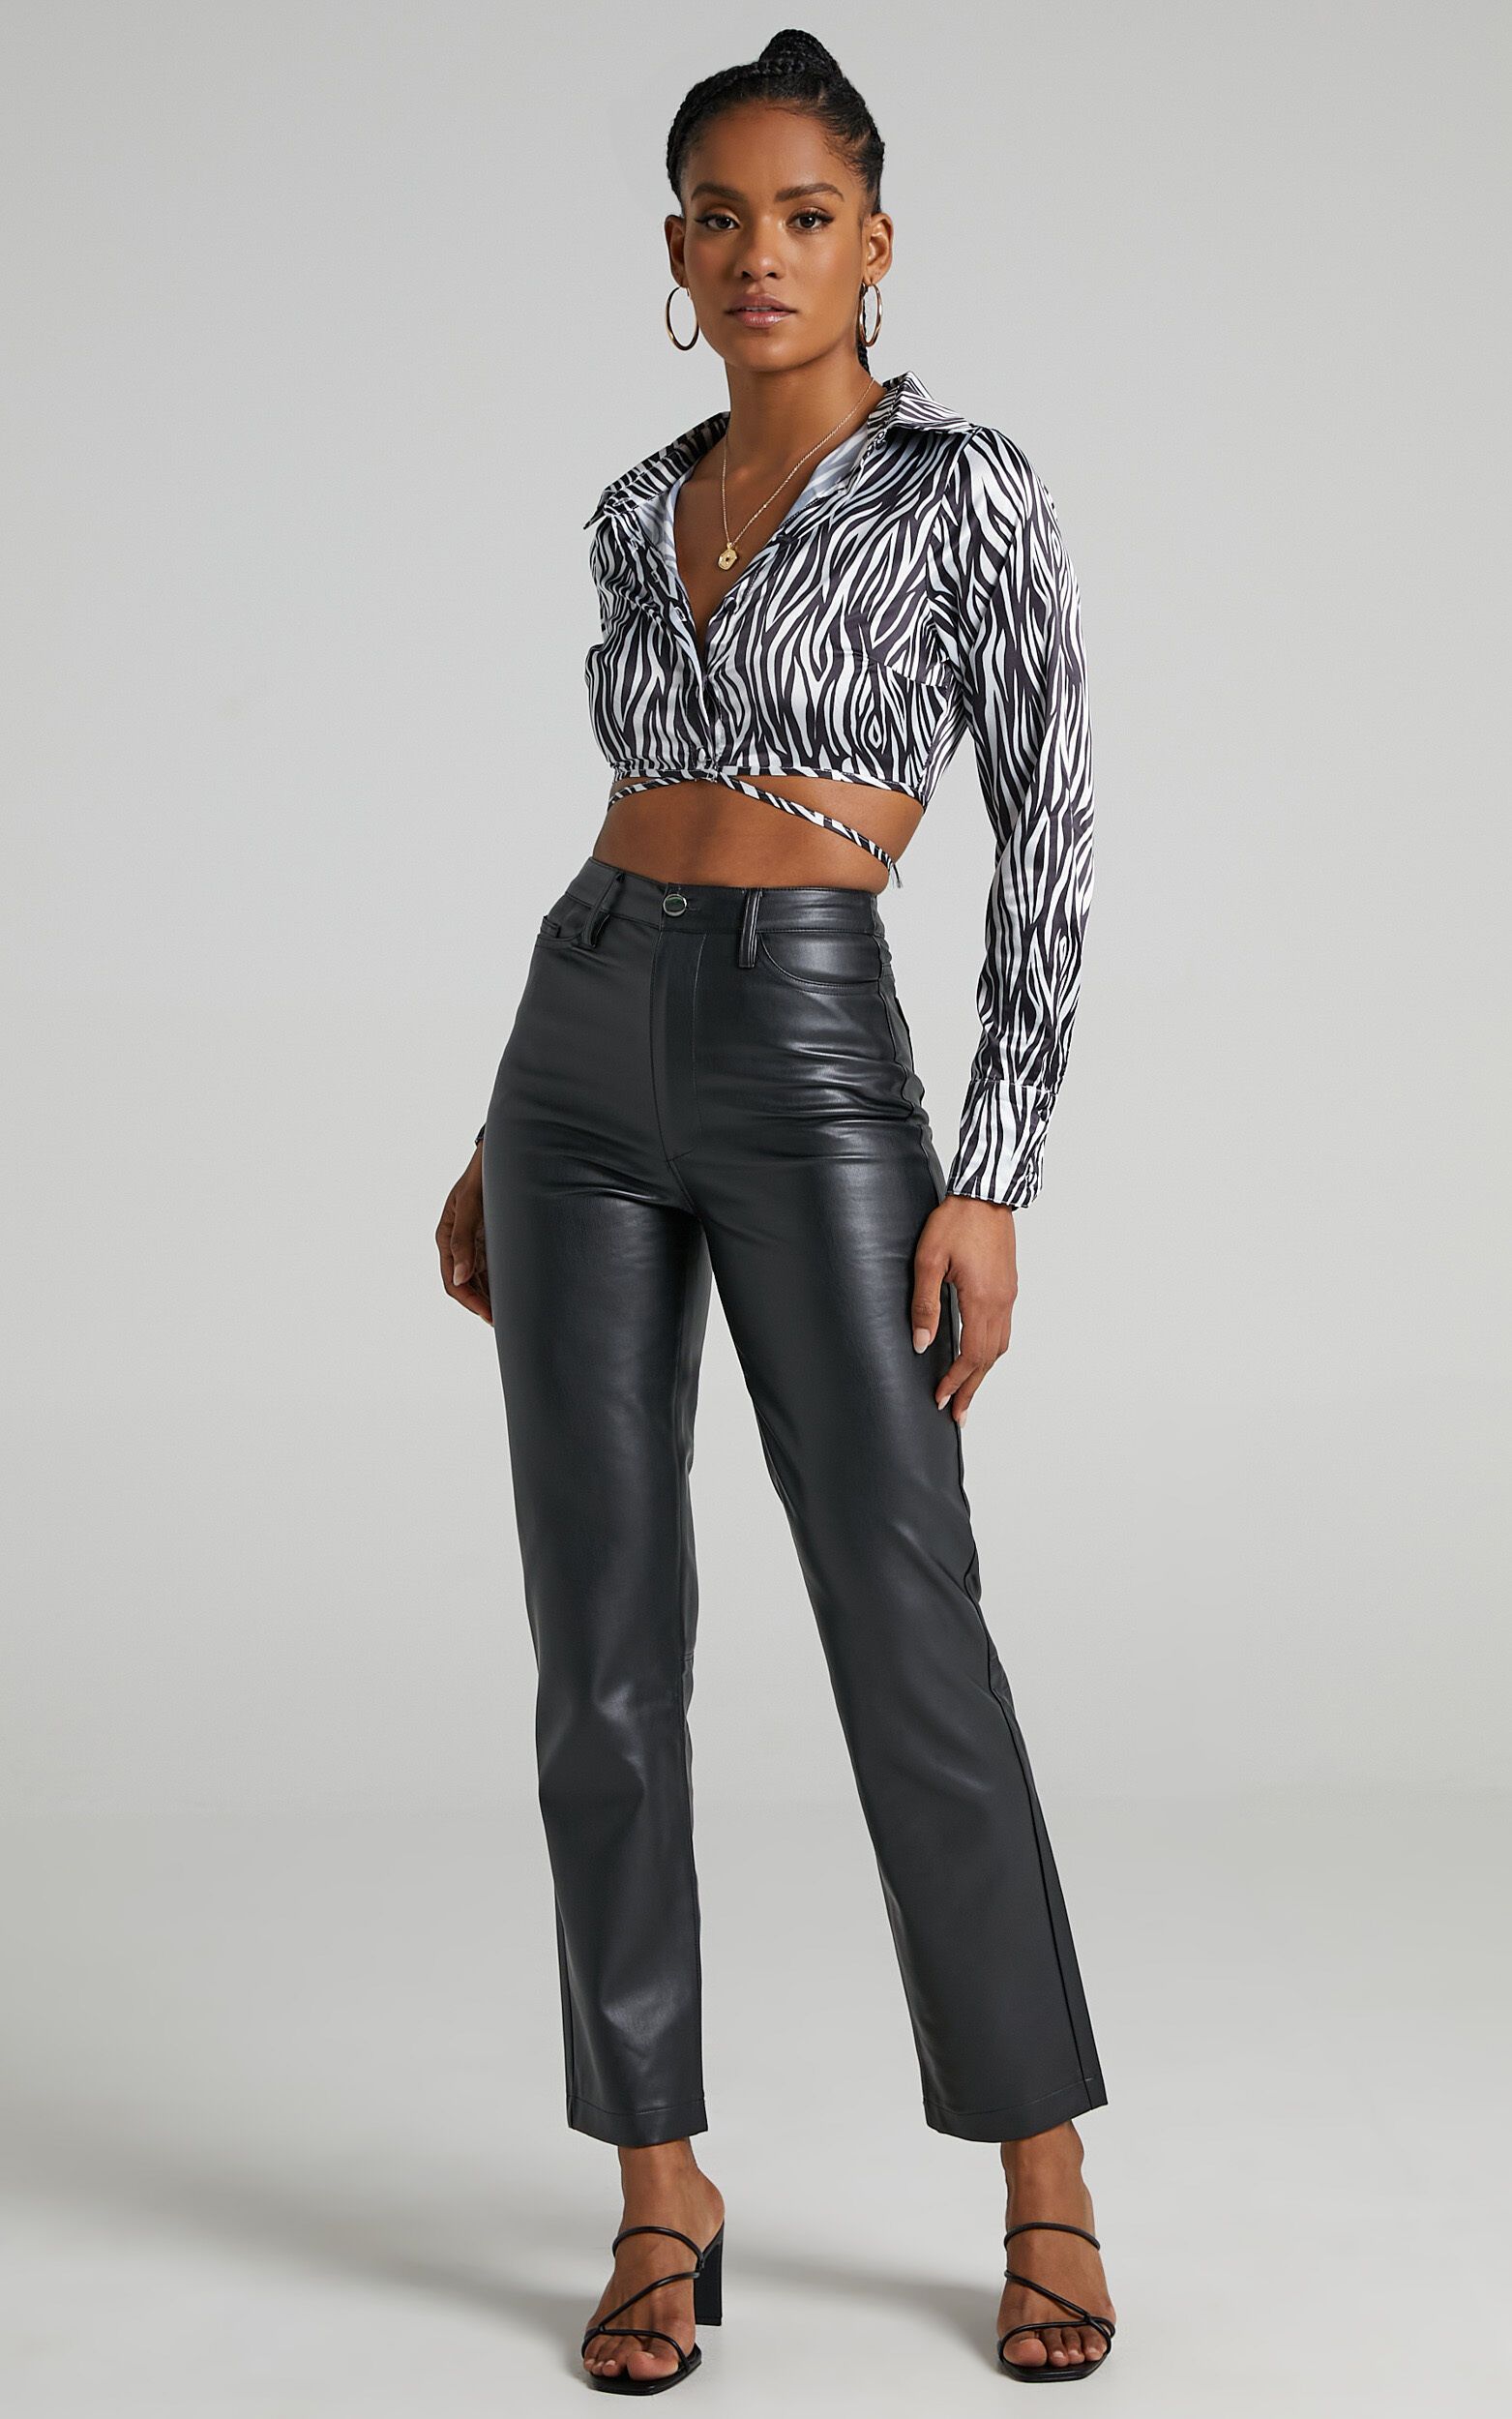 Dilyenne Pants in Black Leatherette | Showpo - deactived